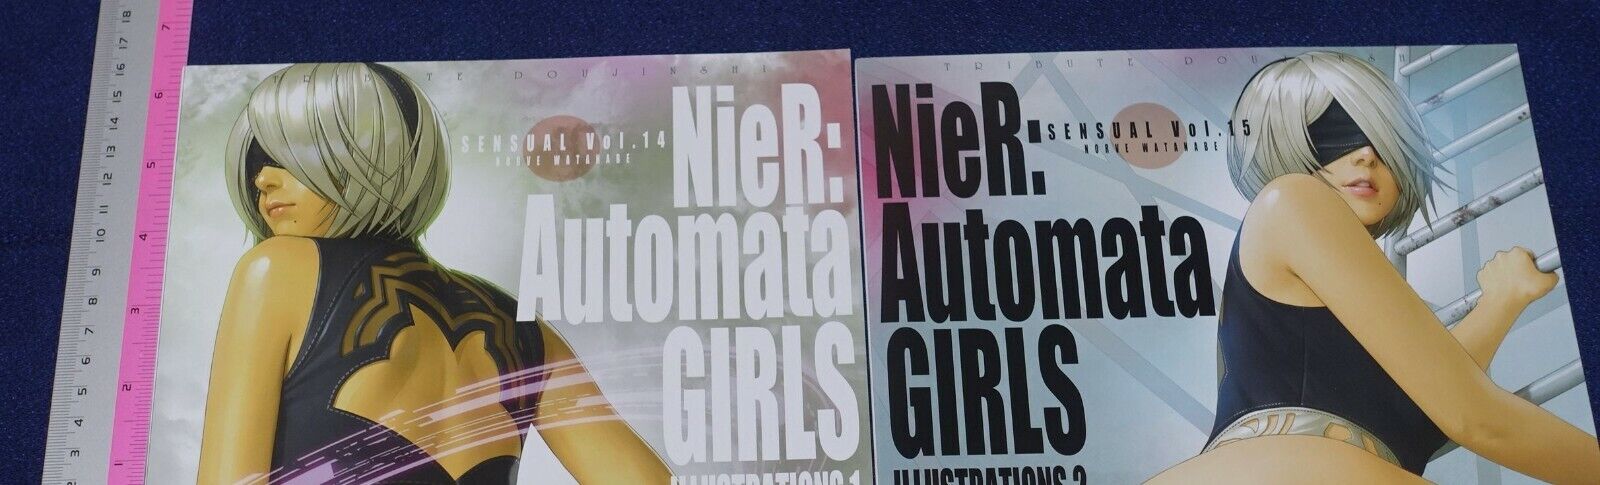 Castlism NieR Fan Art Book NieR Automata GIRLS ILLUSTRATIONS1 & 2 Set 